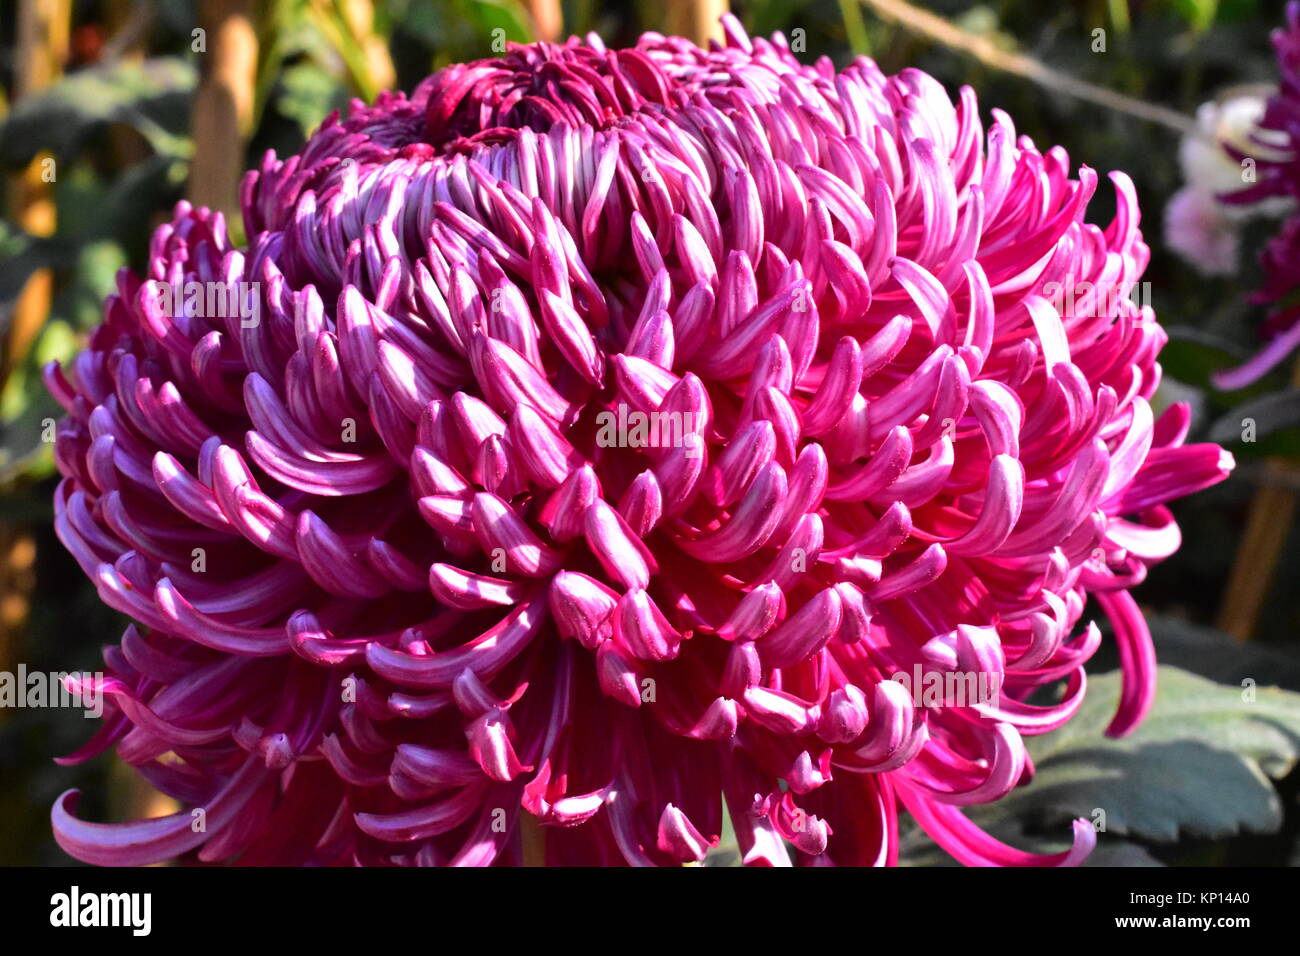 A pink chrysanthemum or irregular incurve pink chrysanthemum at Annual Chrysanthemum Show, Terrace Garden, Chandigarh. Stock Photo